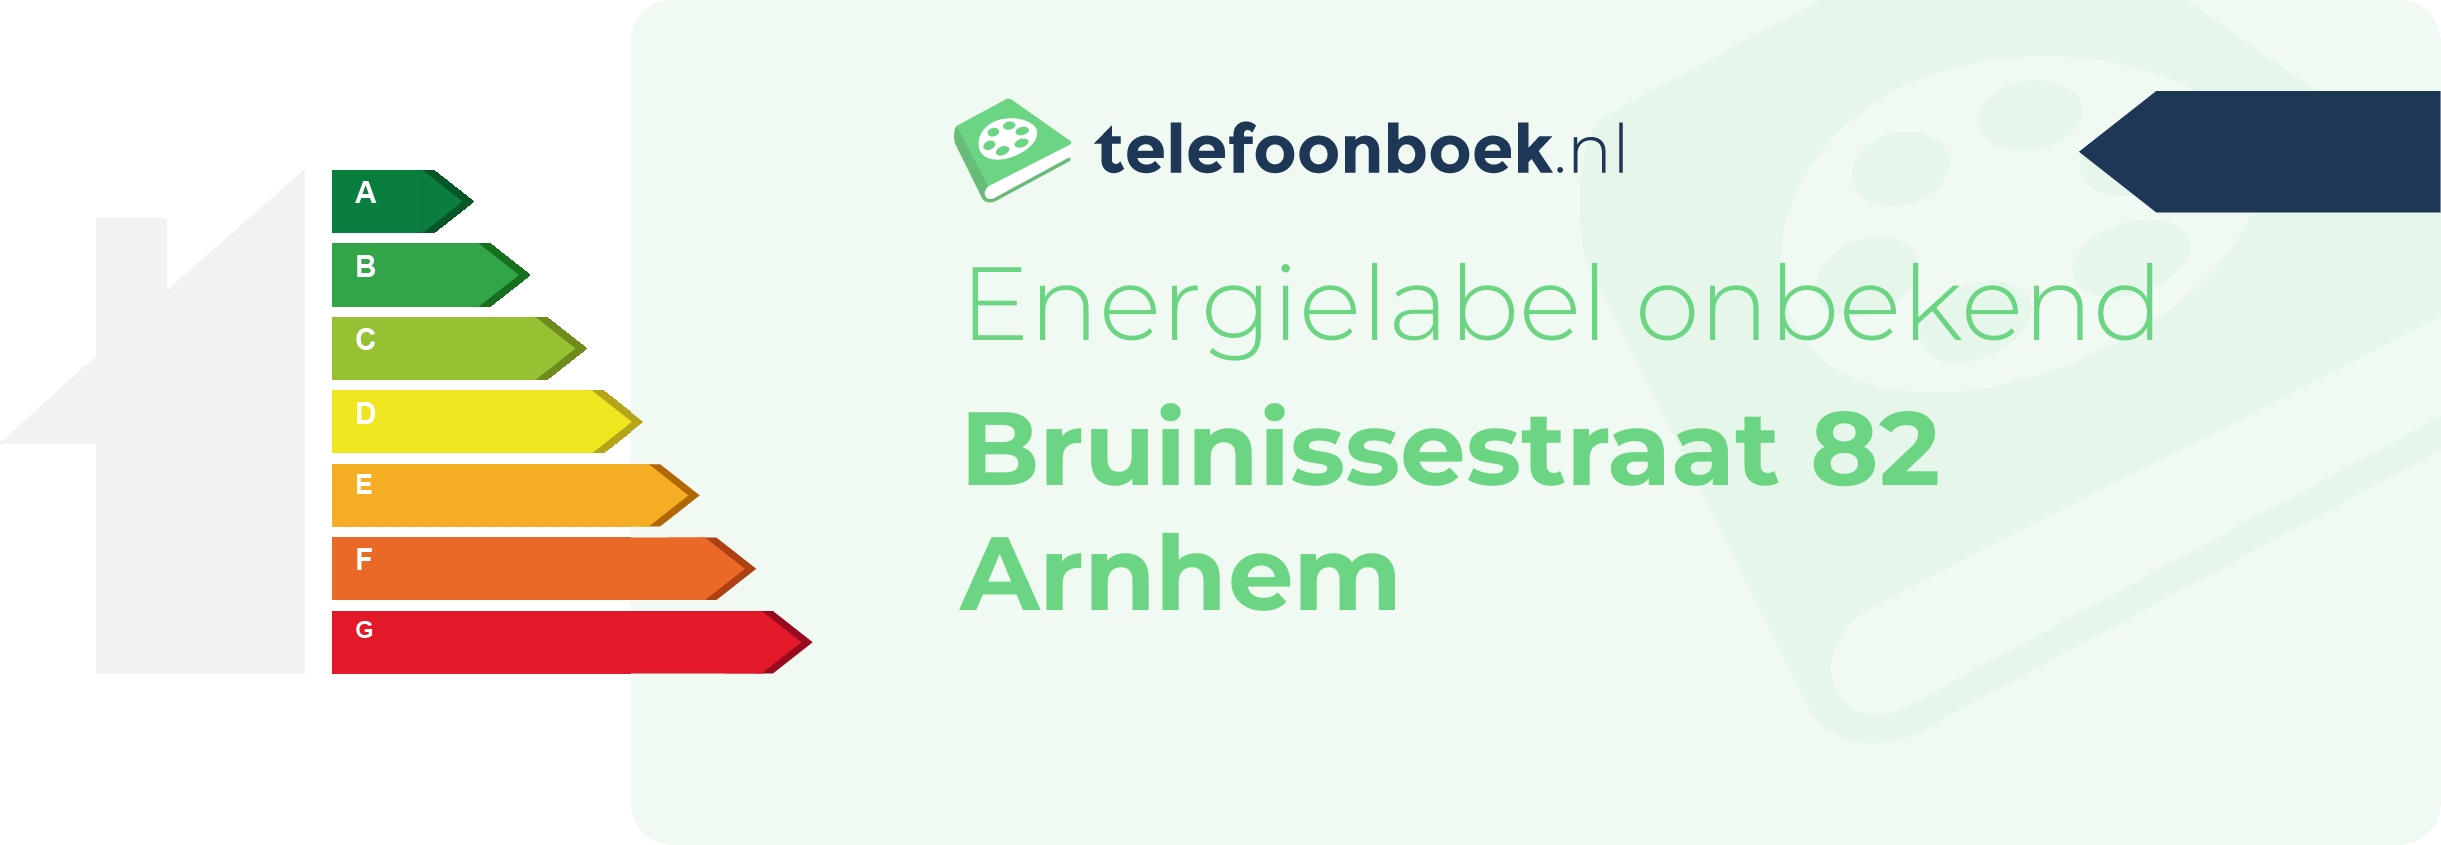 Energielabel Bruinissestraat 82 Arnhem